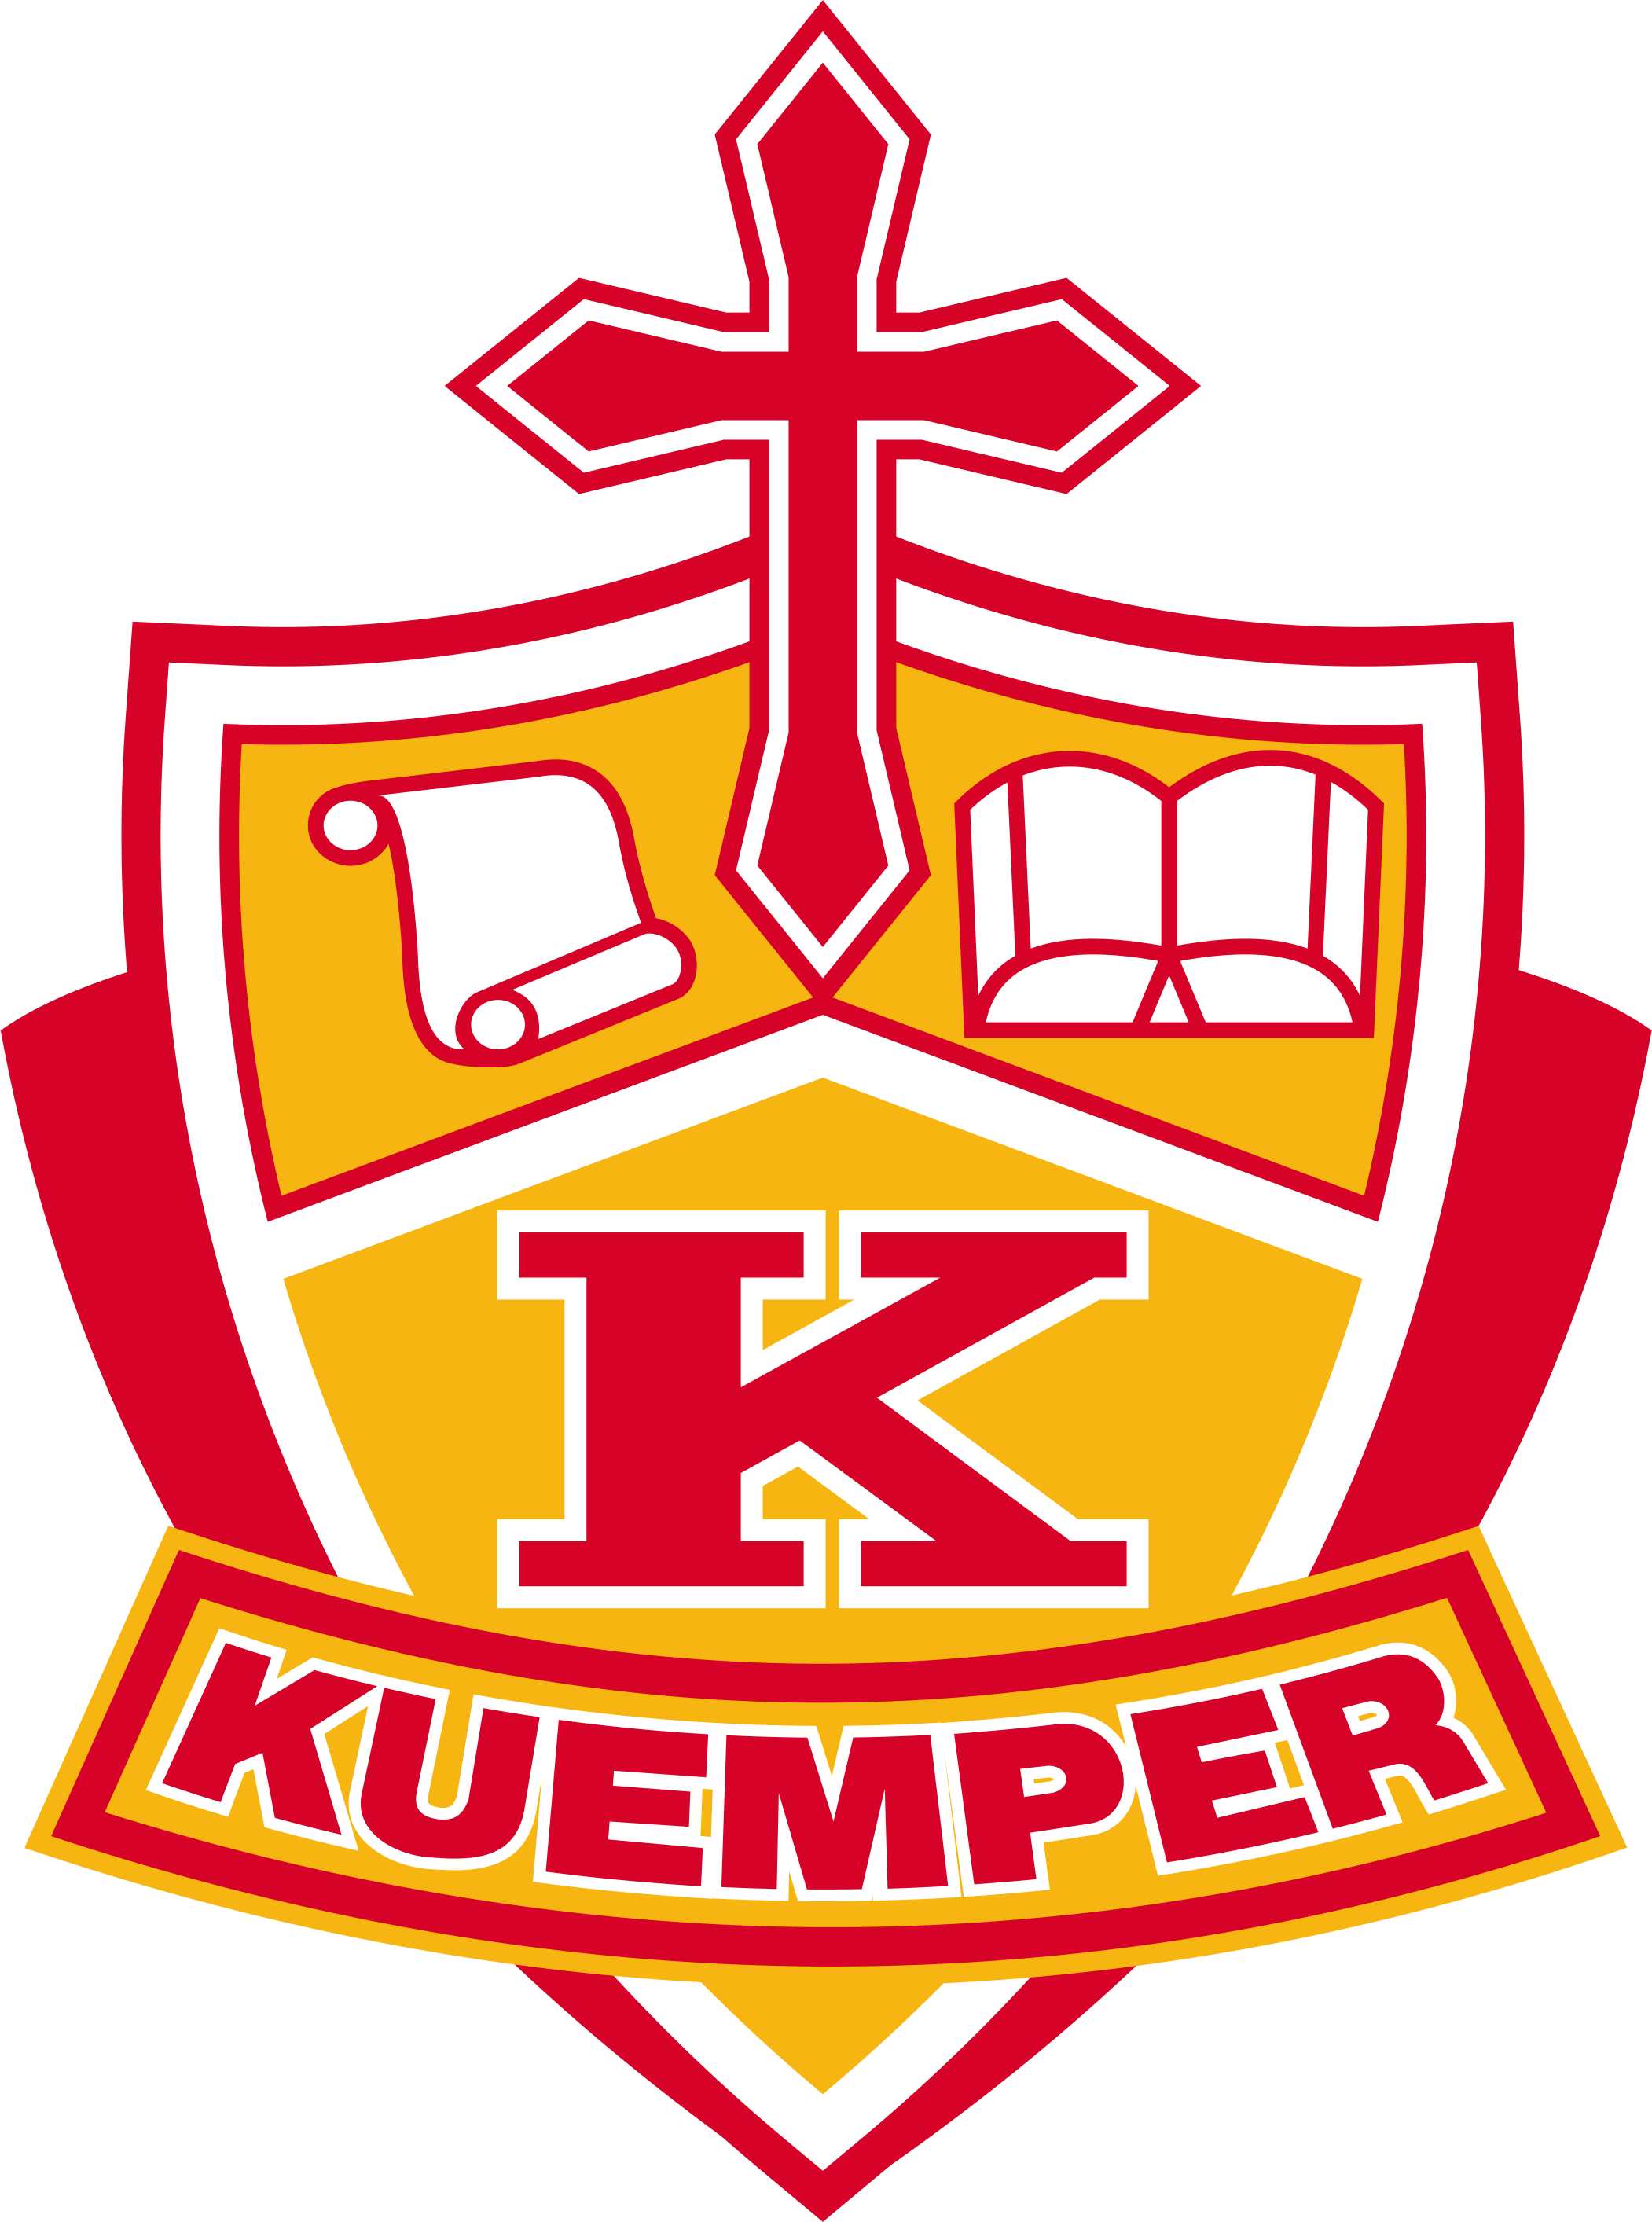 Catholic Logo - New Logos and Branding Standards - Kuemper Catholic School System